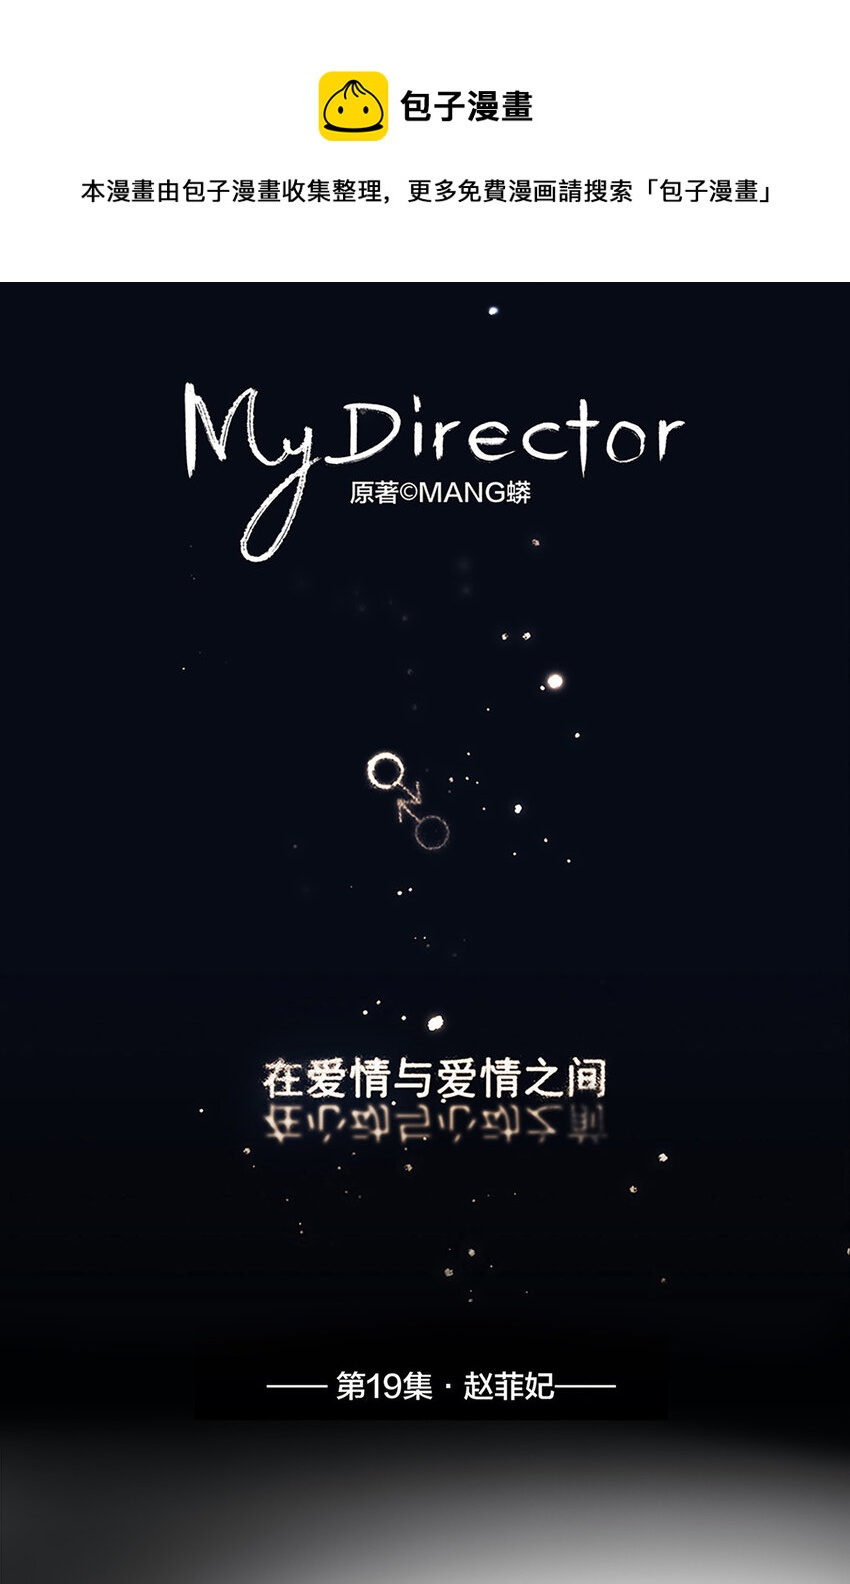 My Director - 019 趙菲妃 - 1